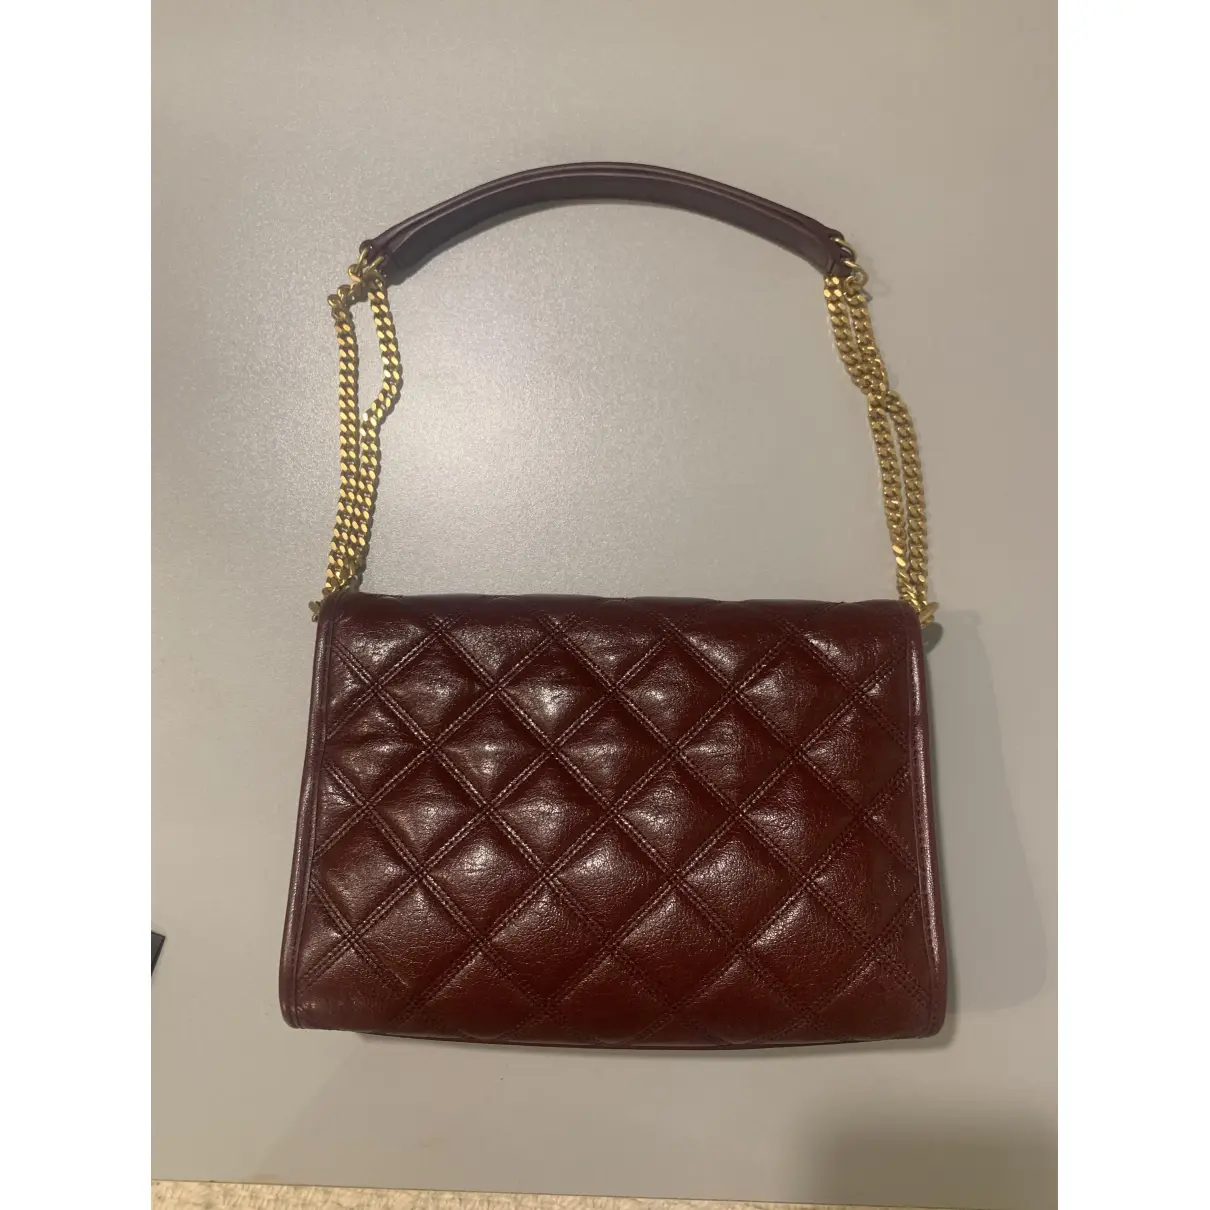 Buy Saint Laurent Becky leather handbag online